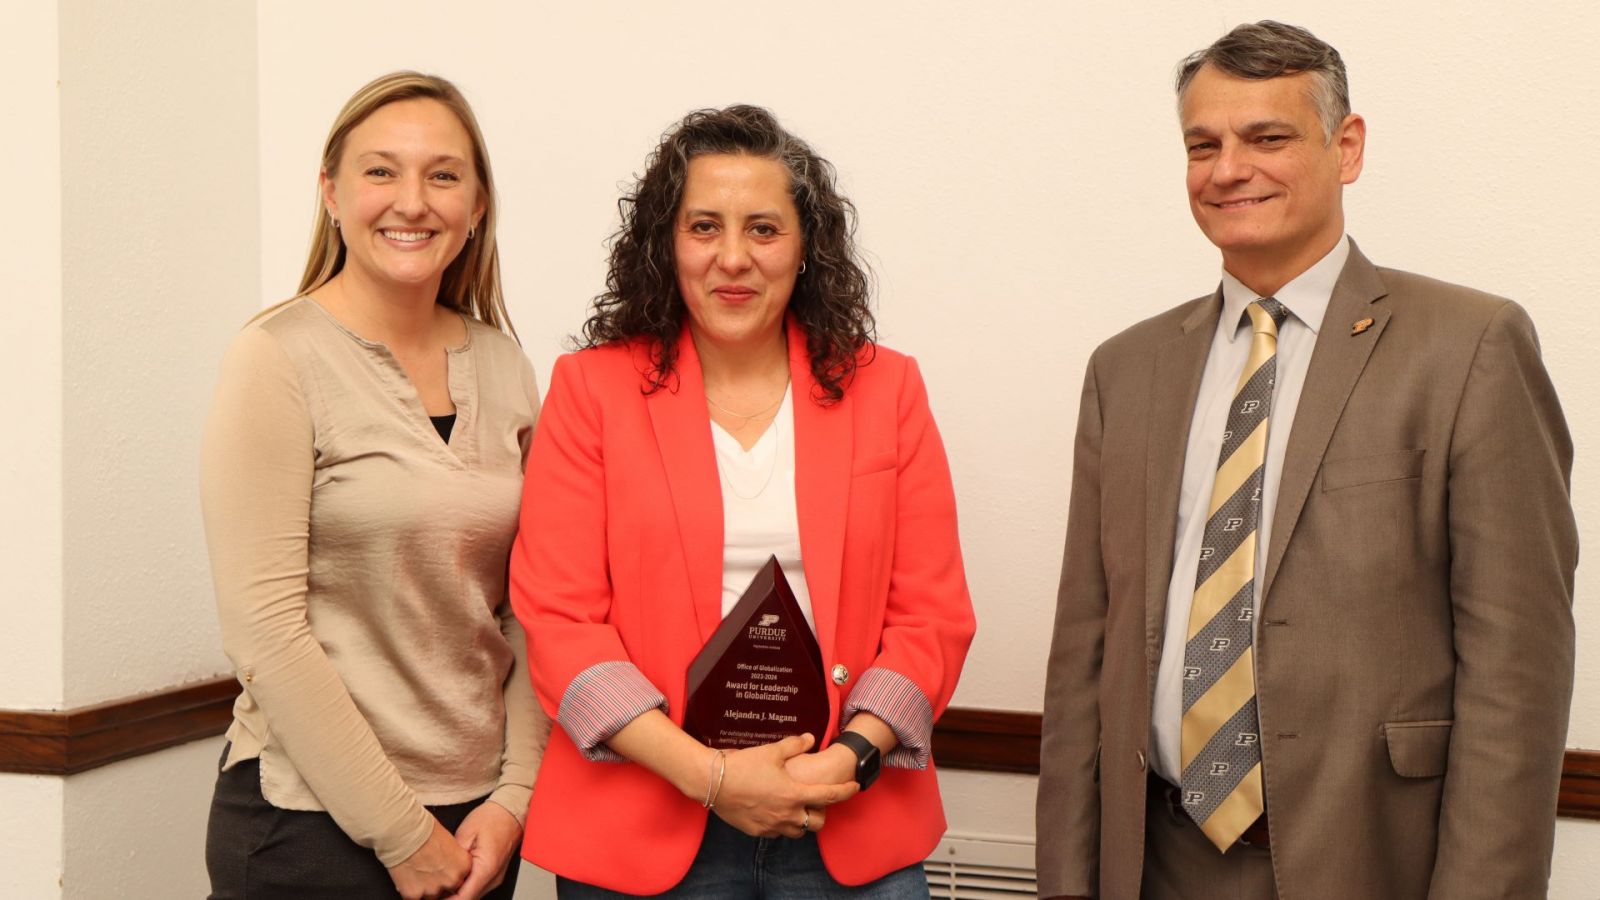 From left to right: Elizabeth Barajas, Alejandra Magana and Dean Castro. (Purdue University photo/John O'Malley)